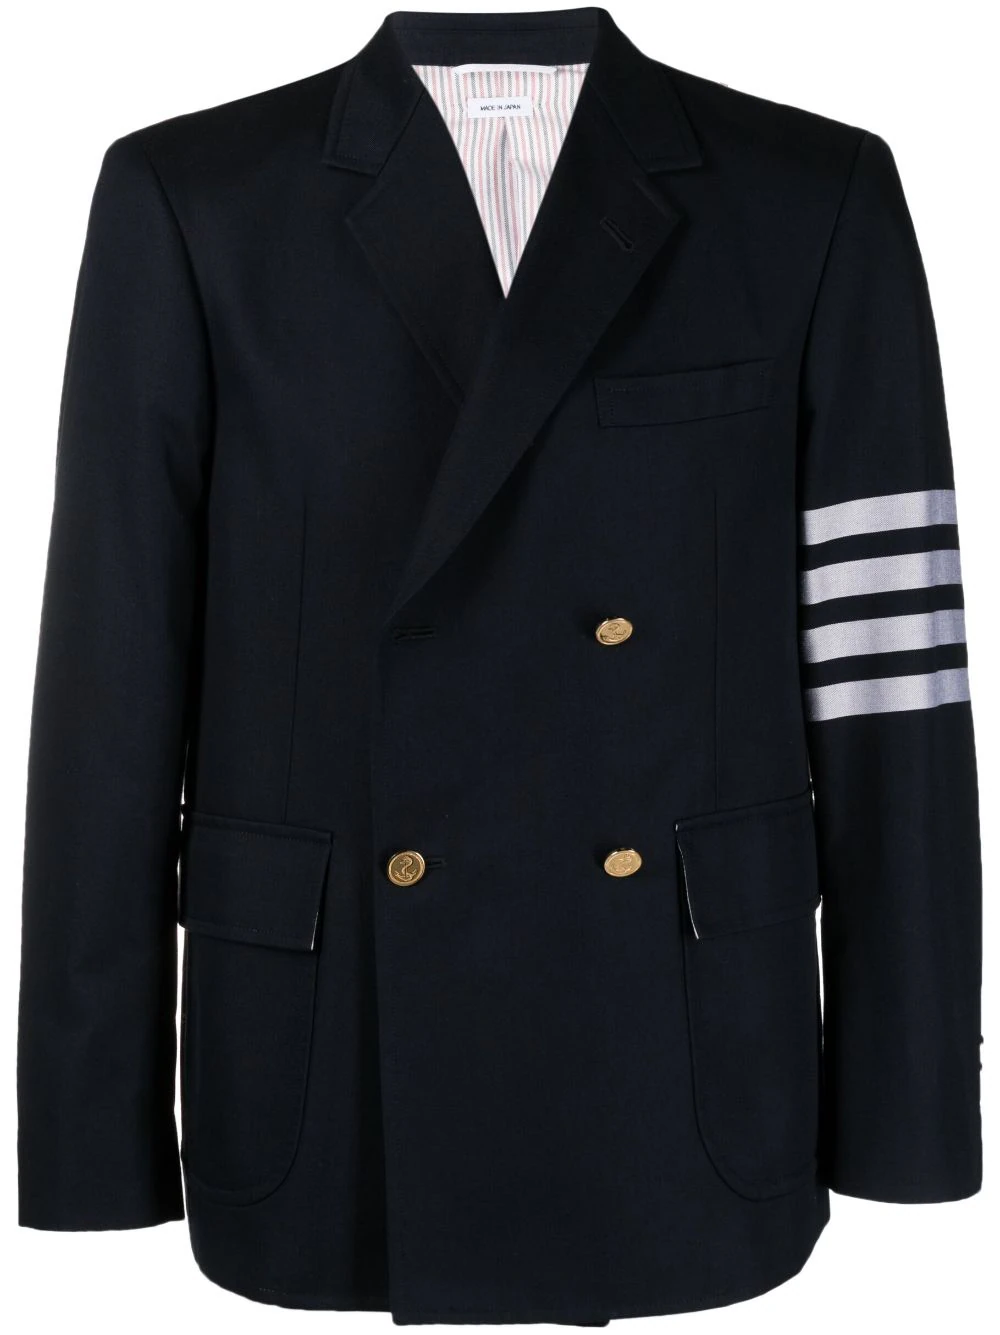 Cotton Twill 4-Bar Unconstructed Classic Sport Coat (Navy)